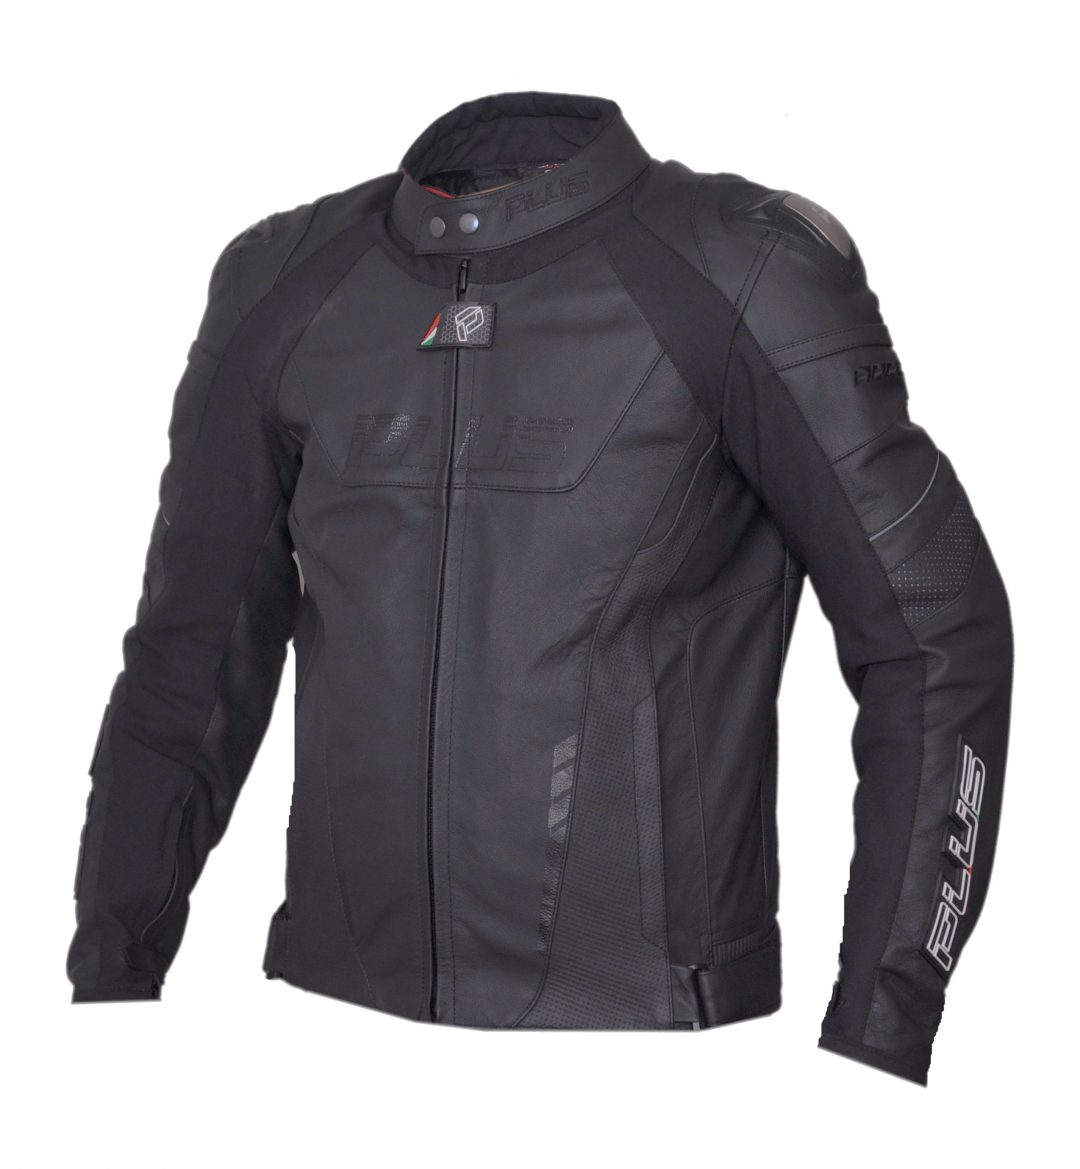 ARROW Leather Jacket – $399 | PLUS Racing Gear